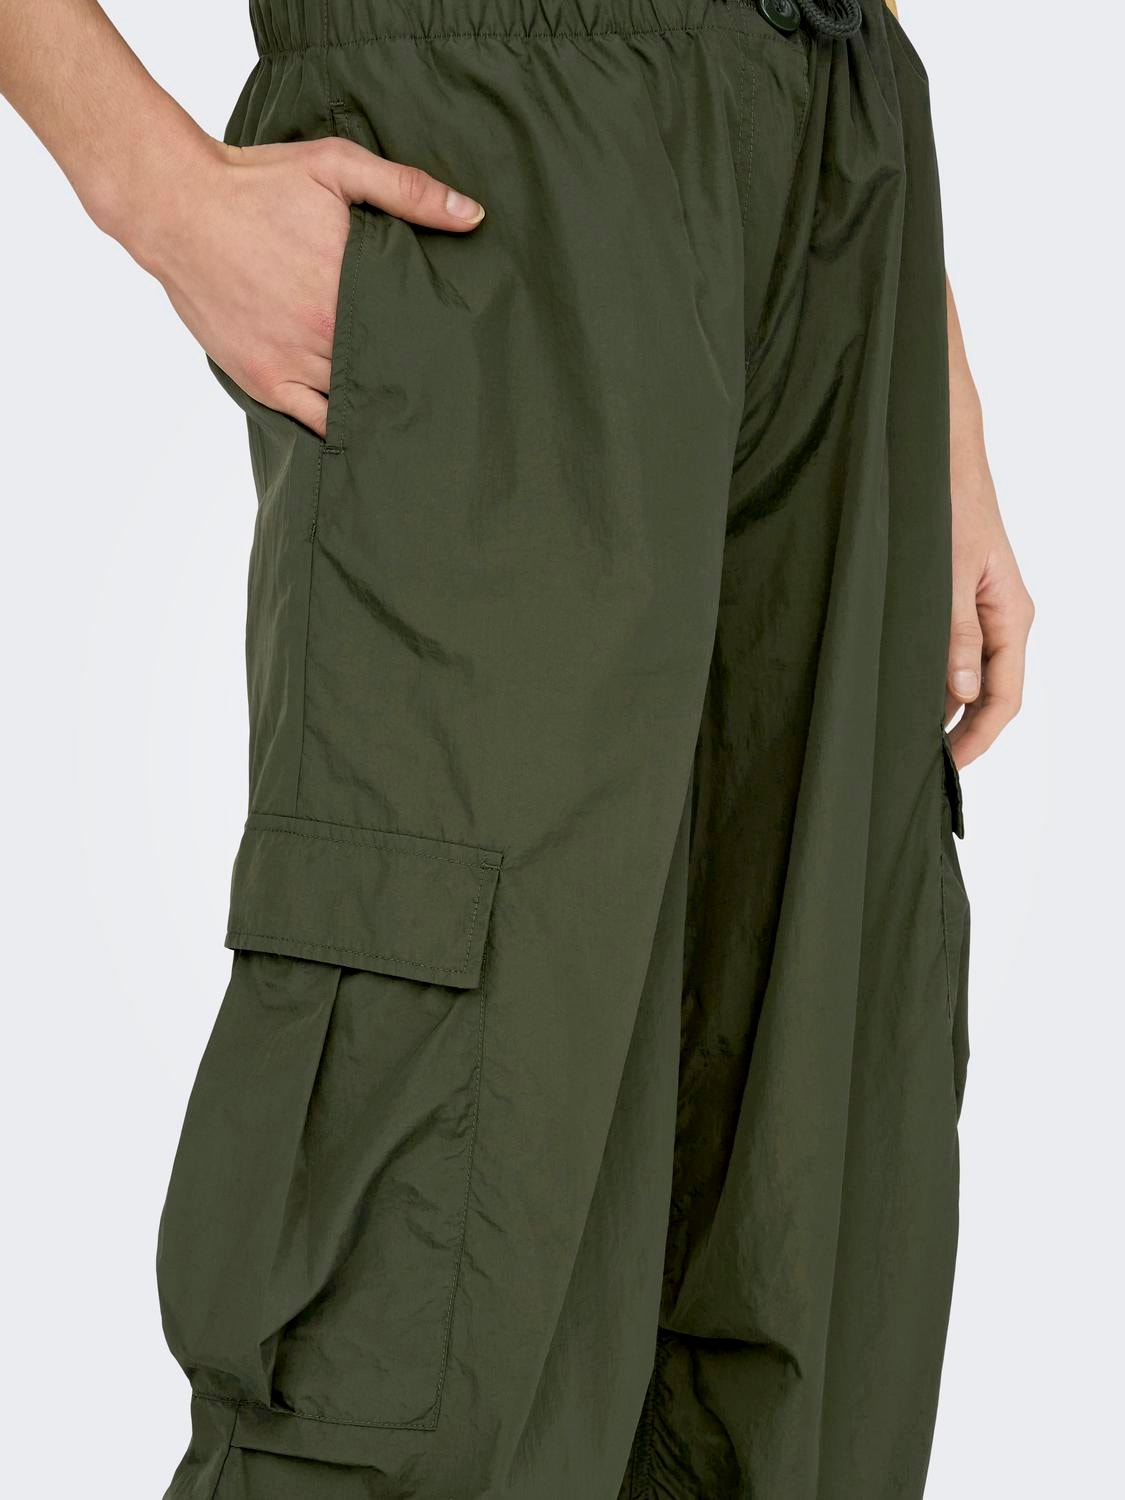 MRULIC yoga pants Casual Women's Solid Cargo Pants Belt Casual